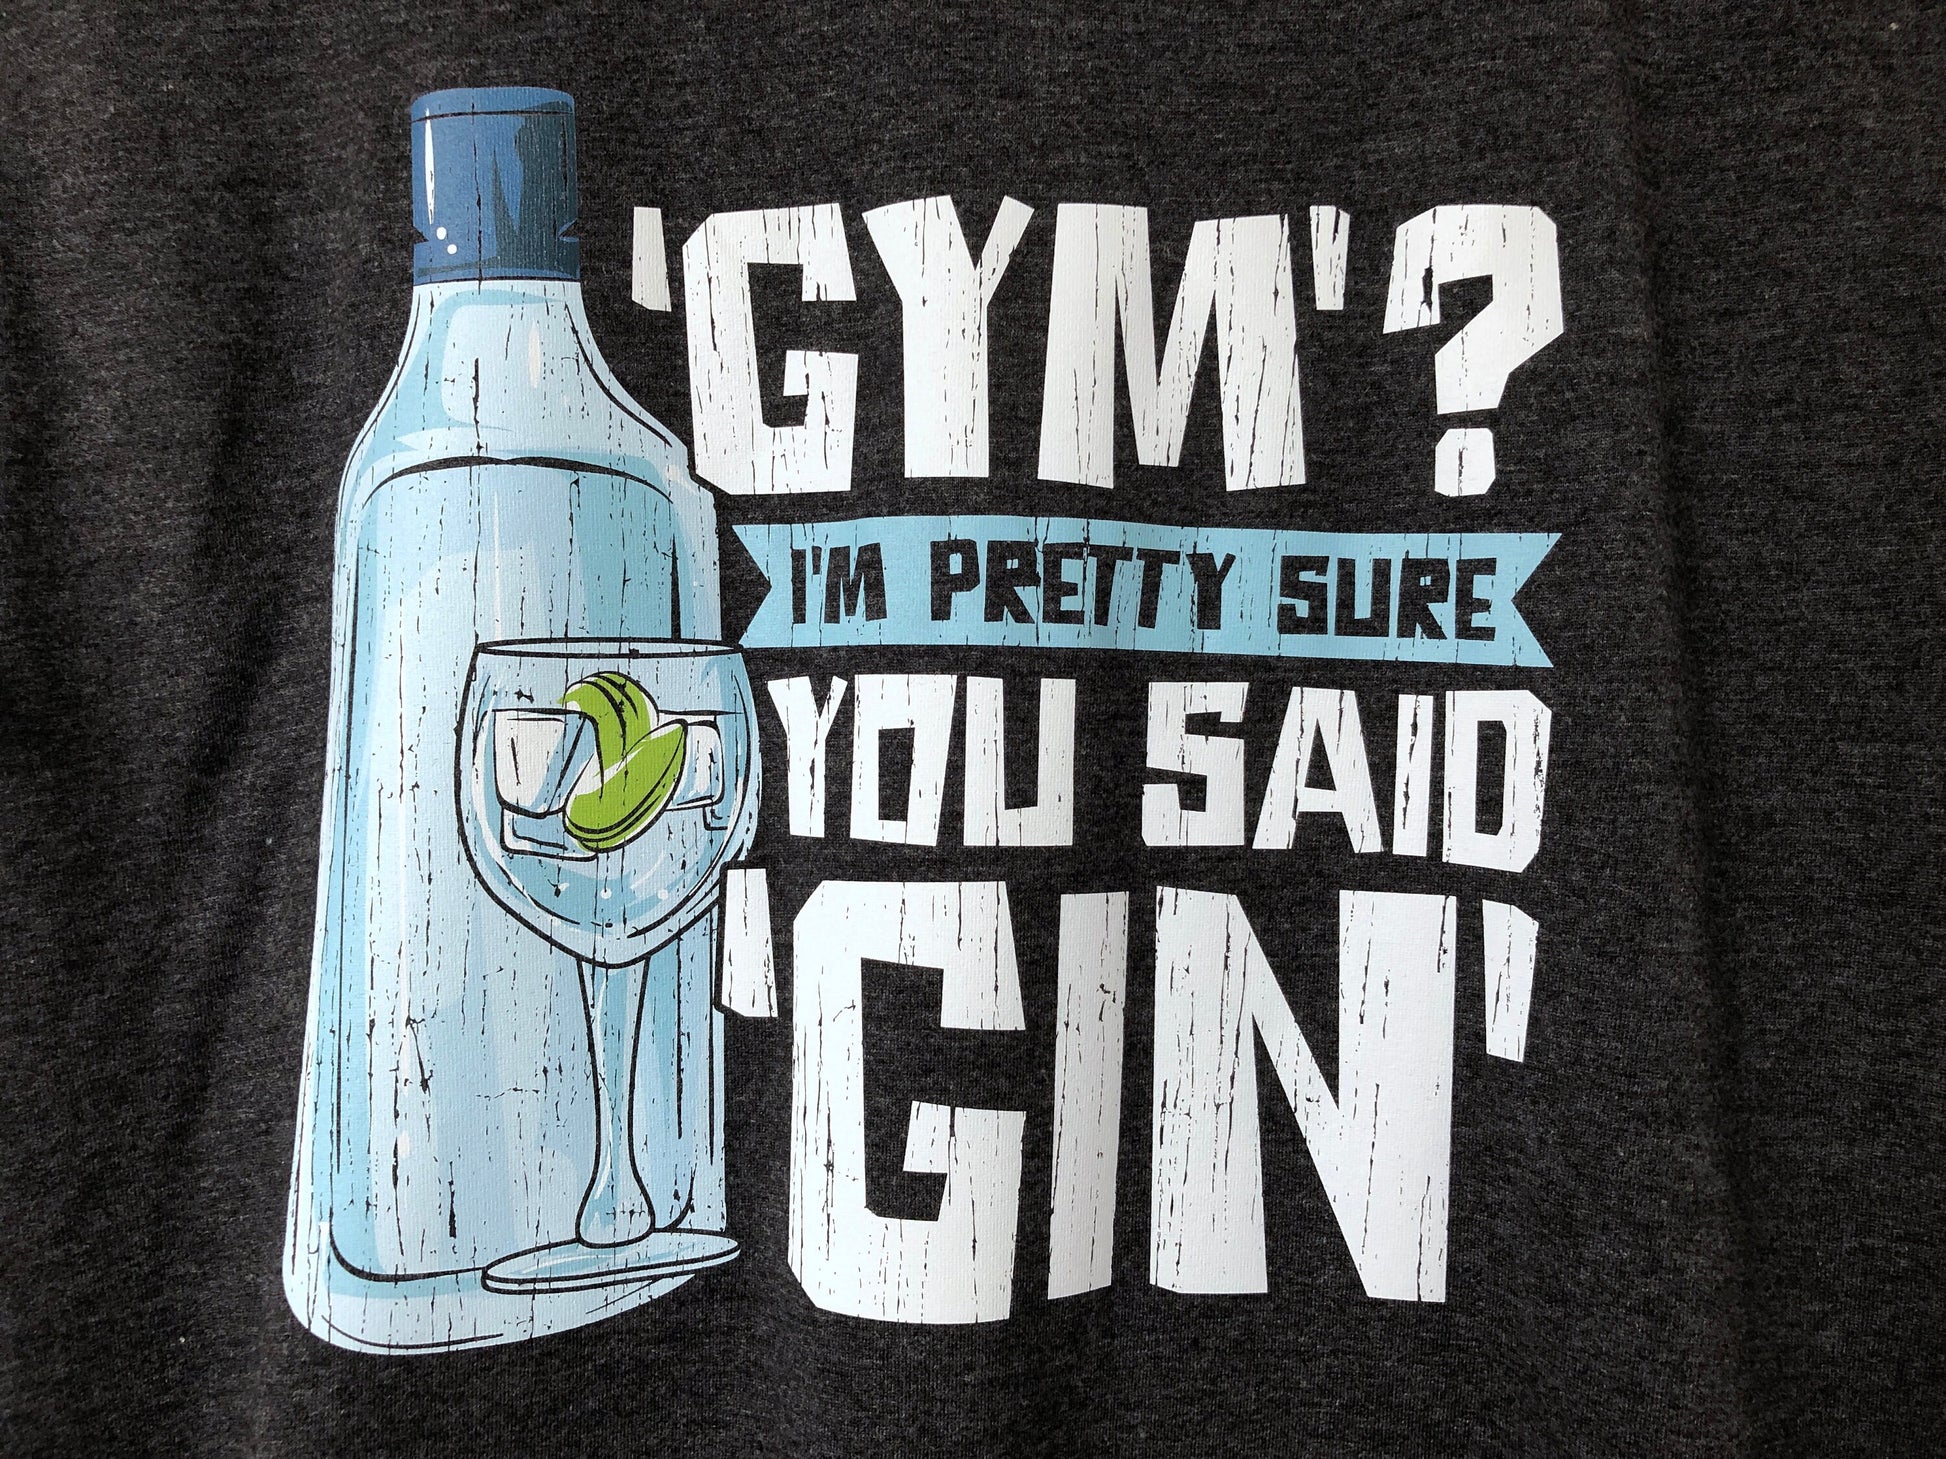 Women's Gin T-Shirt, Gin and Tonic Fitted T-Shirt Design Gift Idea Gym Tee Shirt T Top